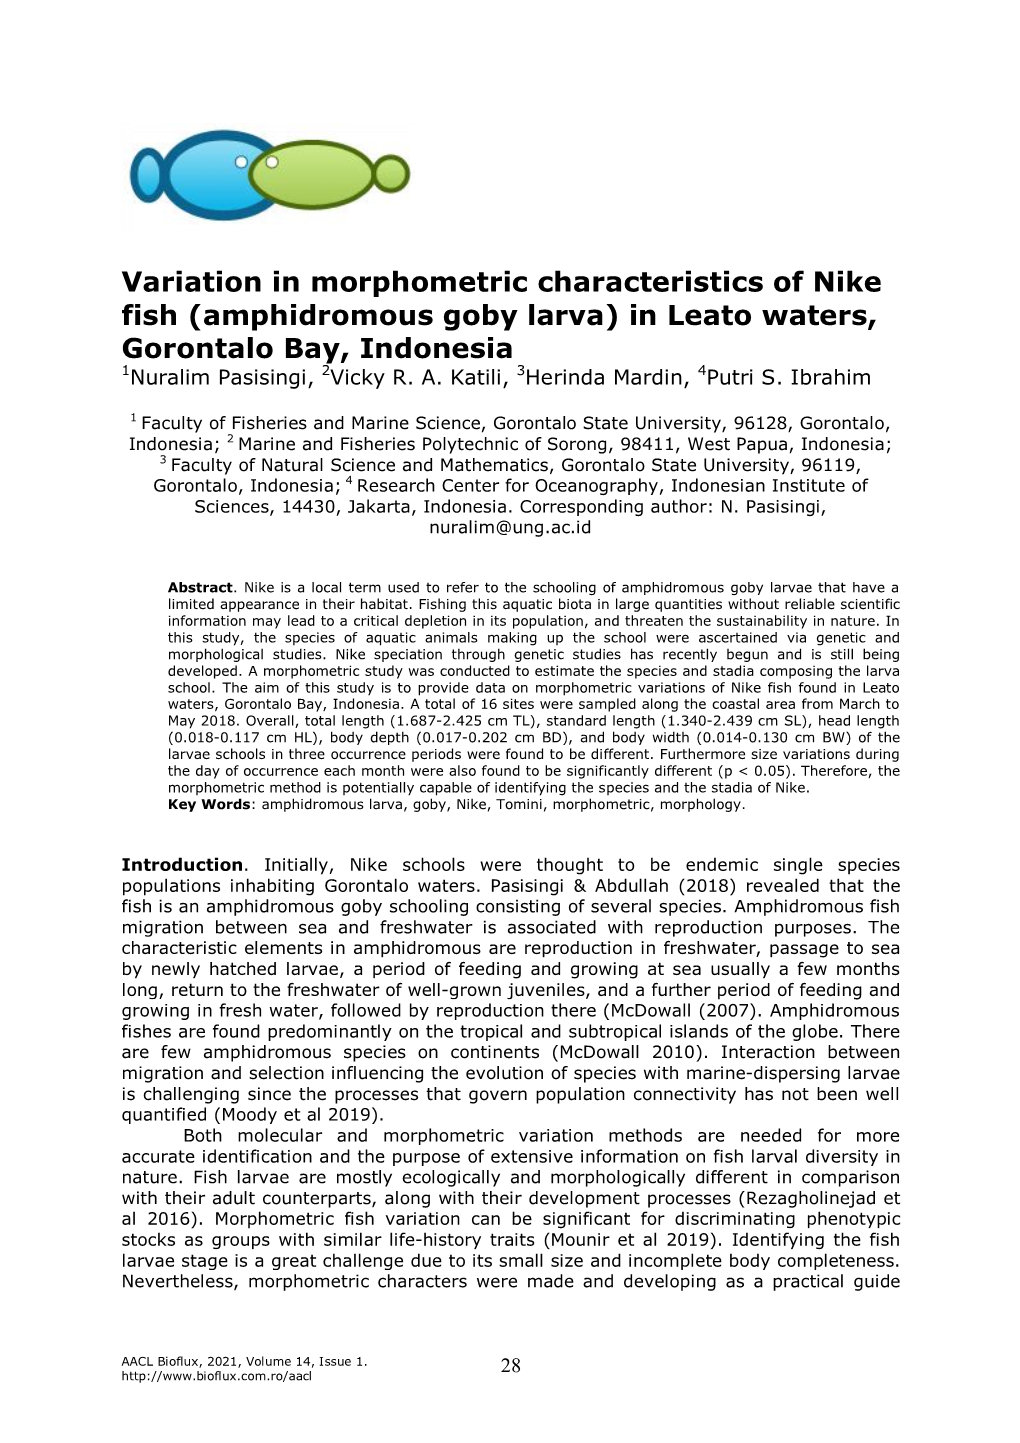 Variation in Morphometric Characteristics of Nike Fish (Amphidromous Goby Larva) in Leato Waters, Gorontalo Bay, Indonesia 1Nuralim Pasisingi, 2Vicky R